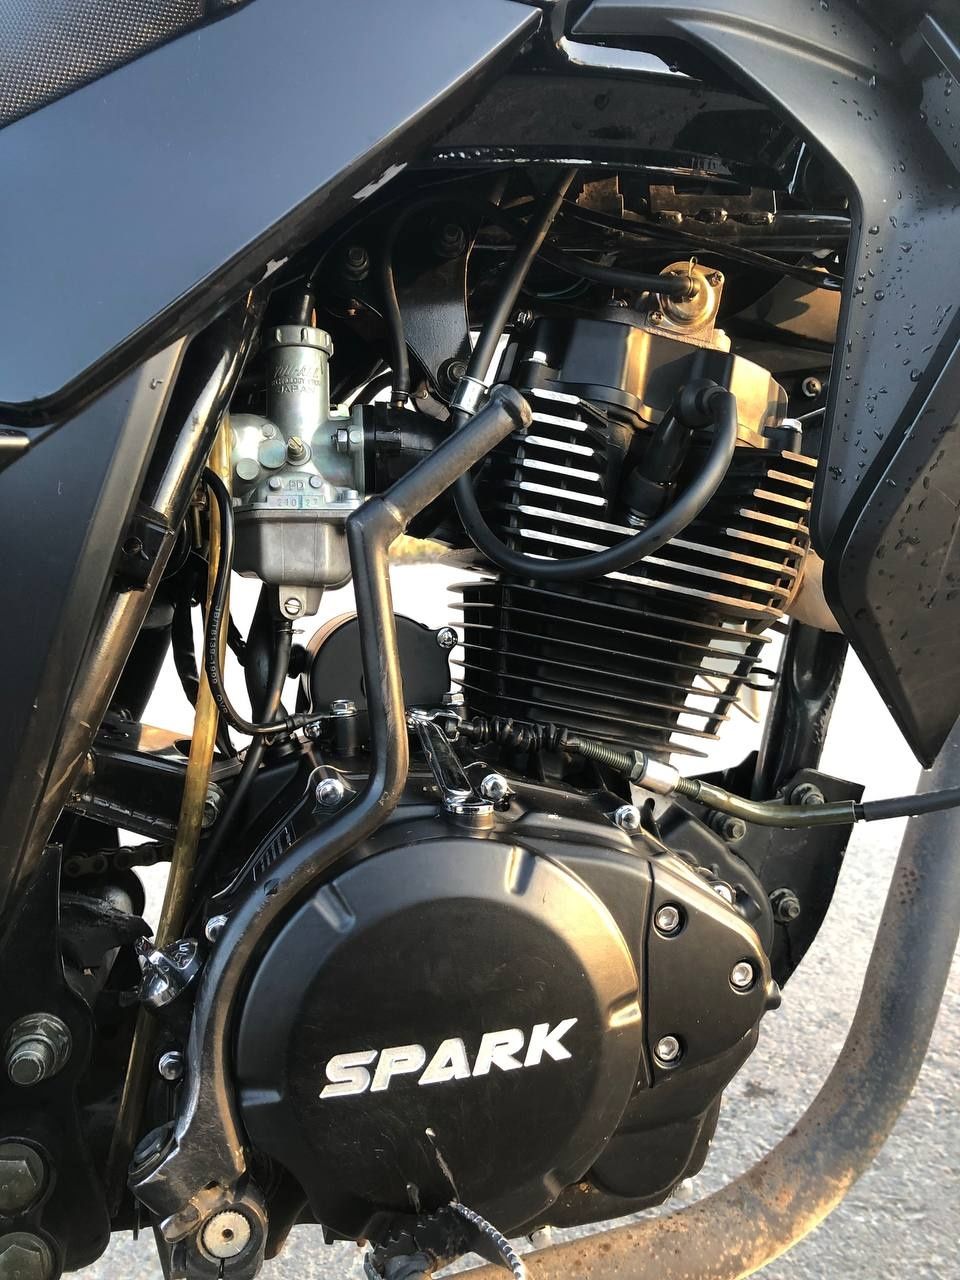 Spark cp28 200cc